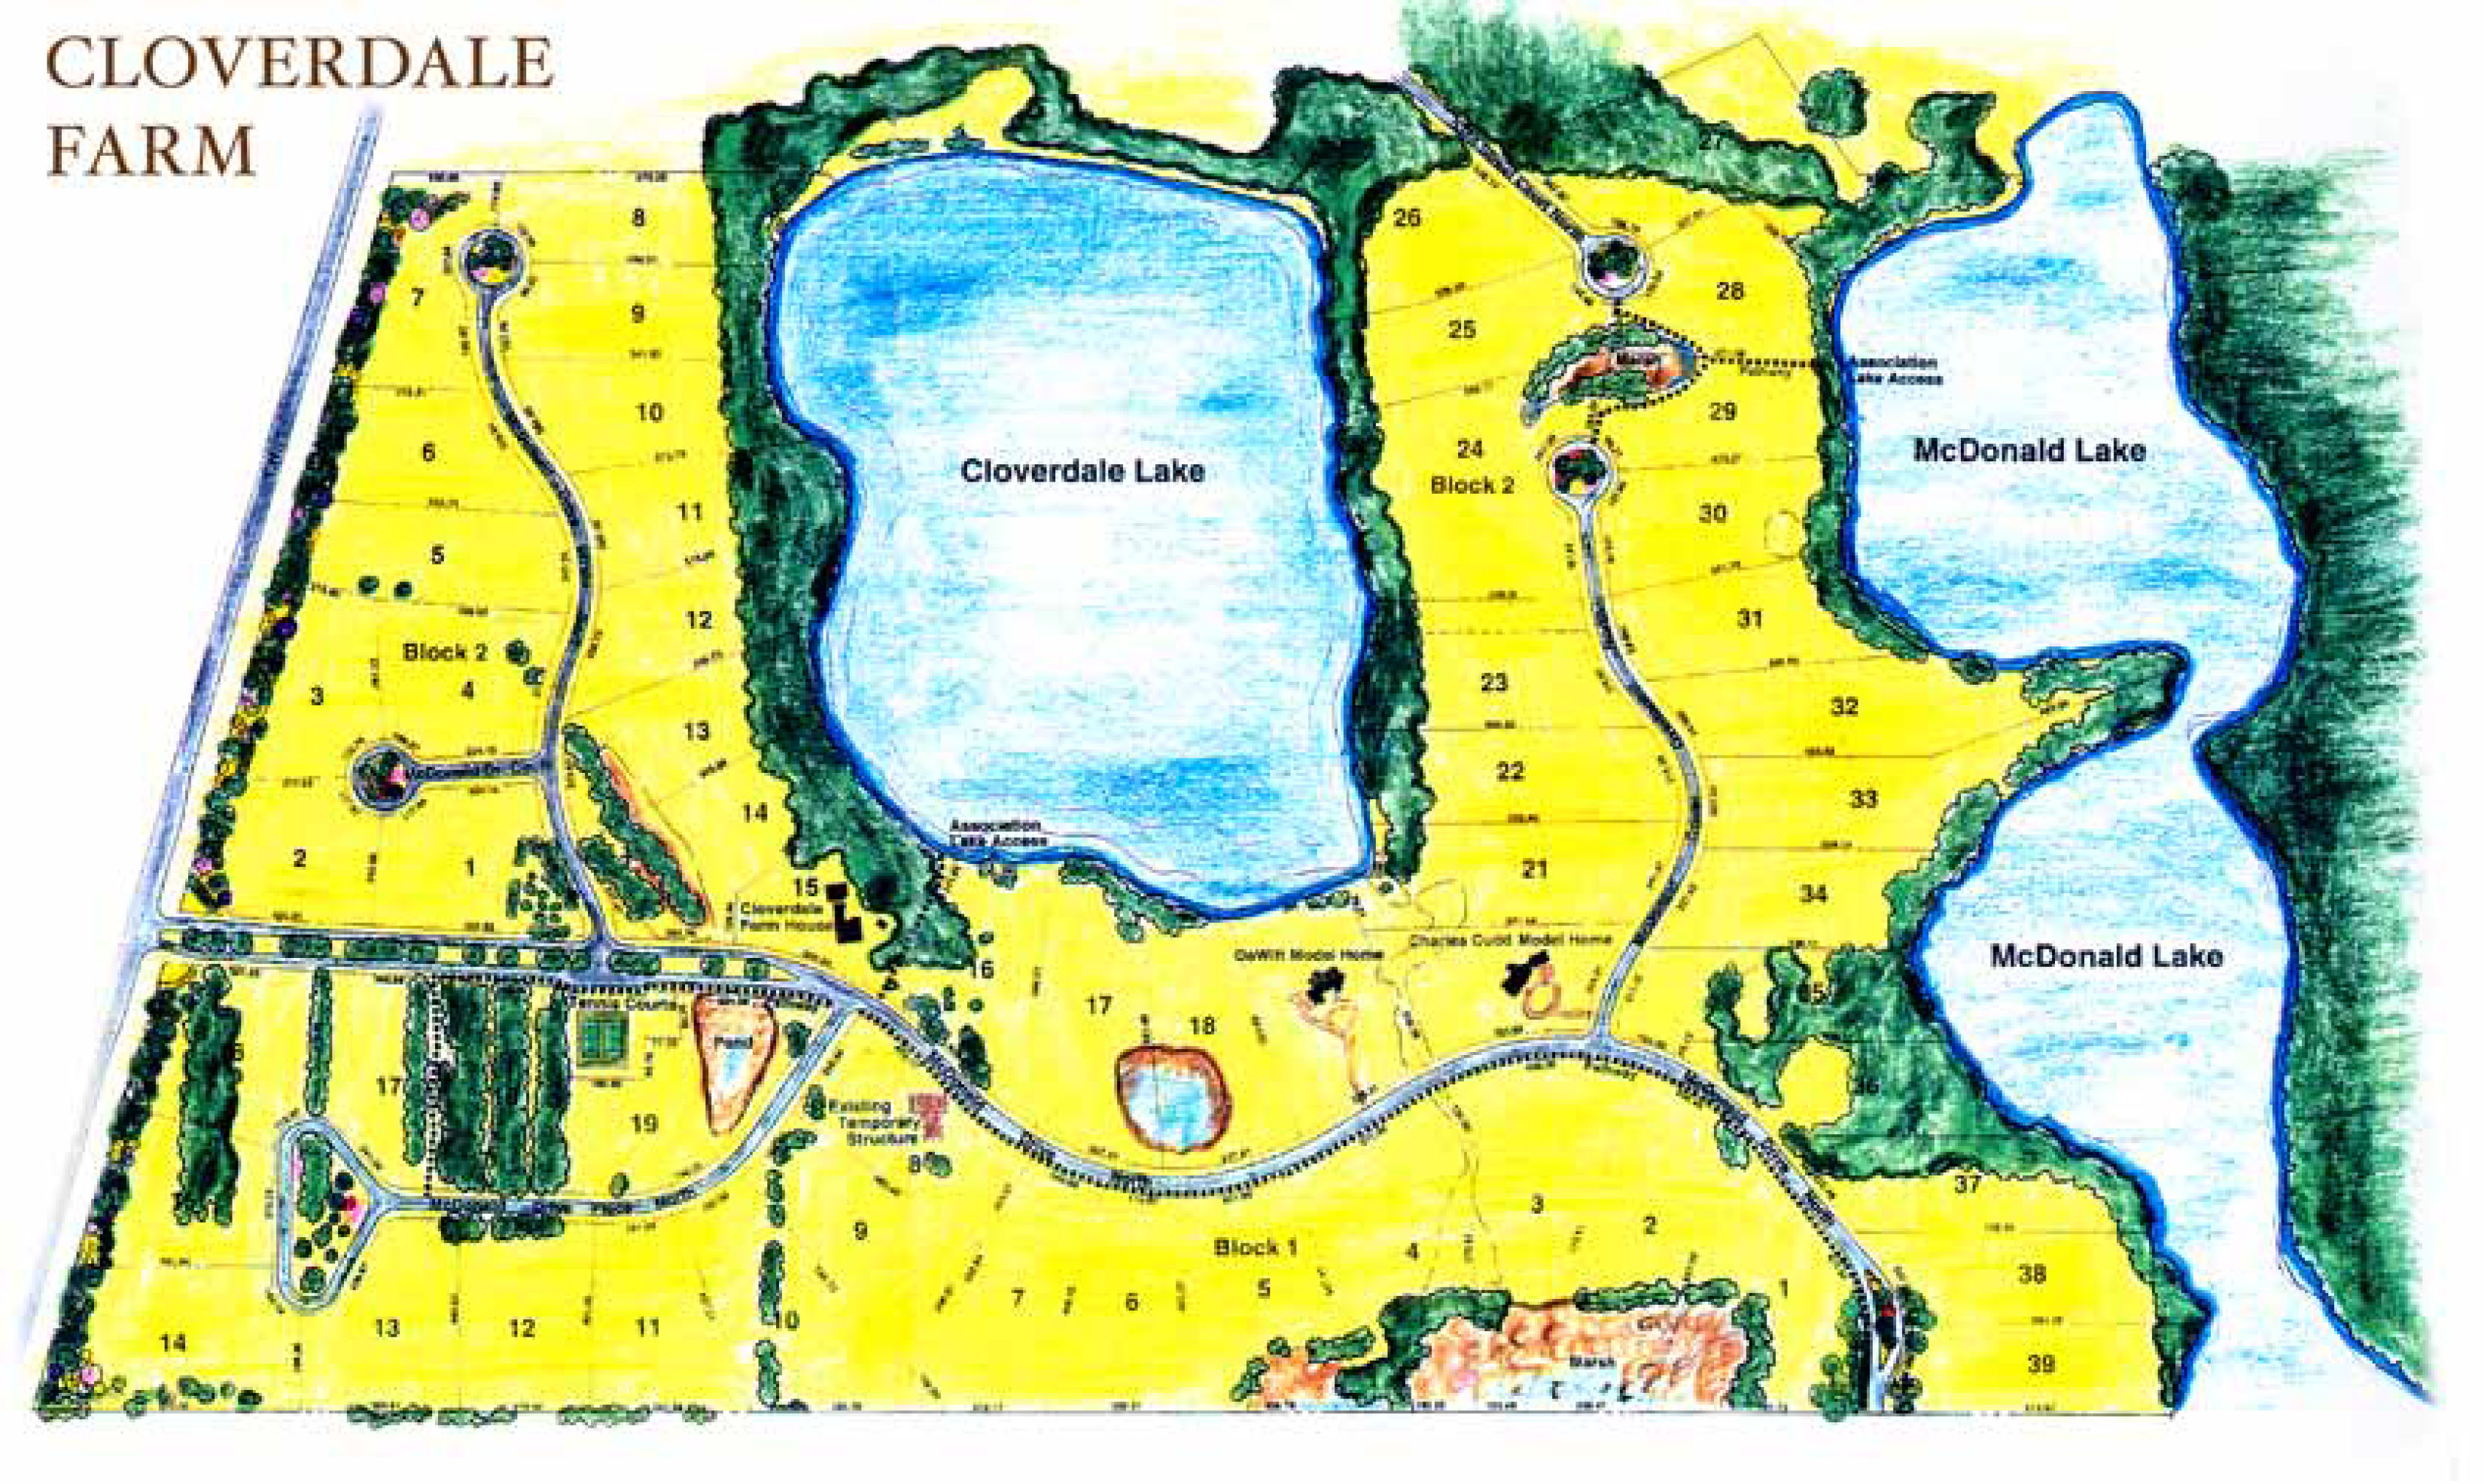 Cloverdale Farm Site Plan